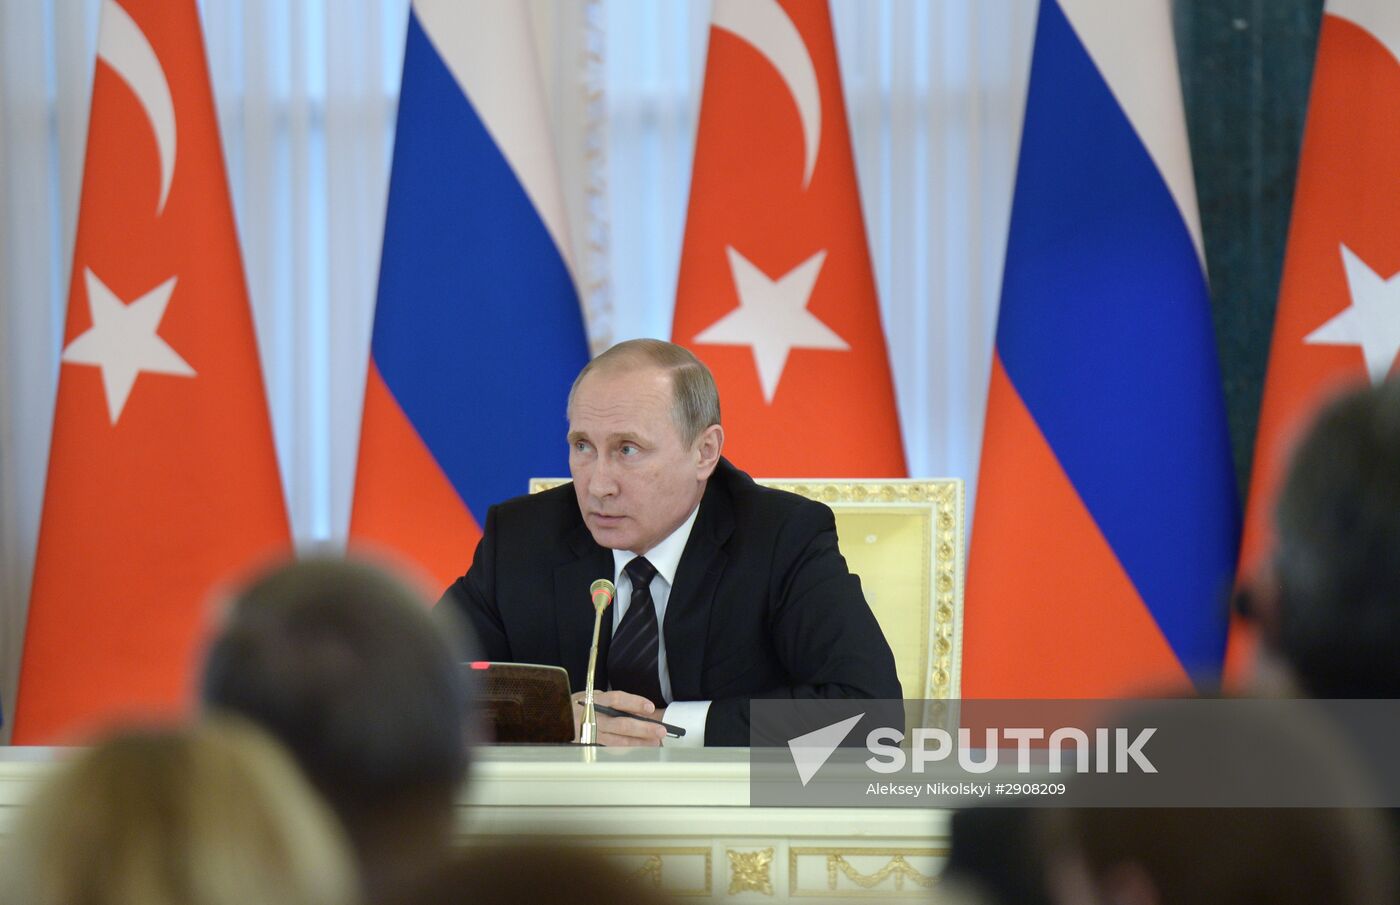 Meeting of Russian President Vladimir Putin and President of Turkey Recep Tayyip Erdogan in St. Petersburg